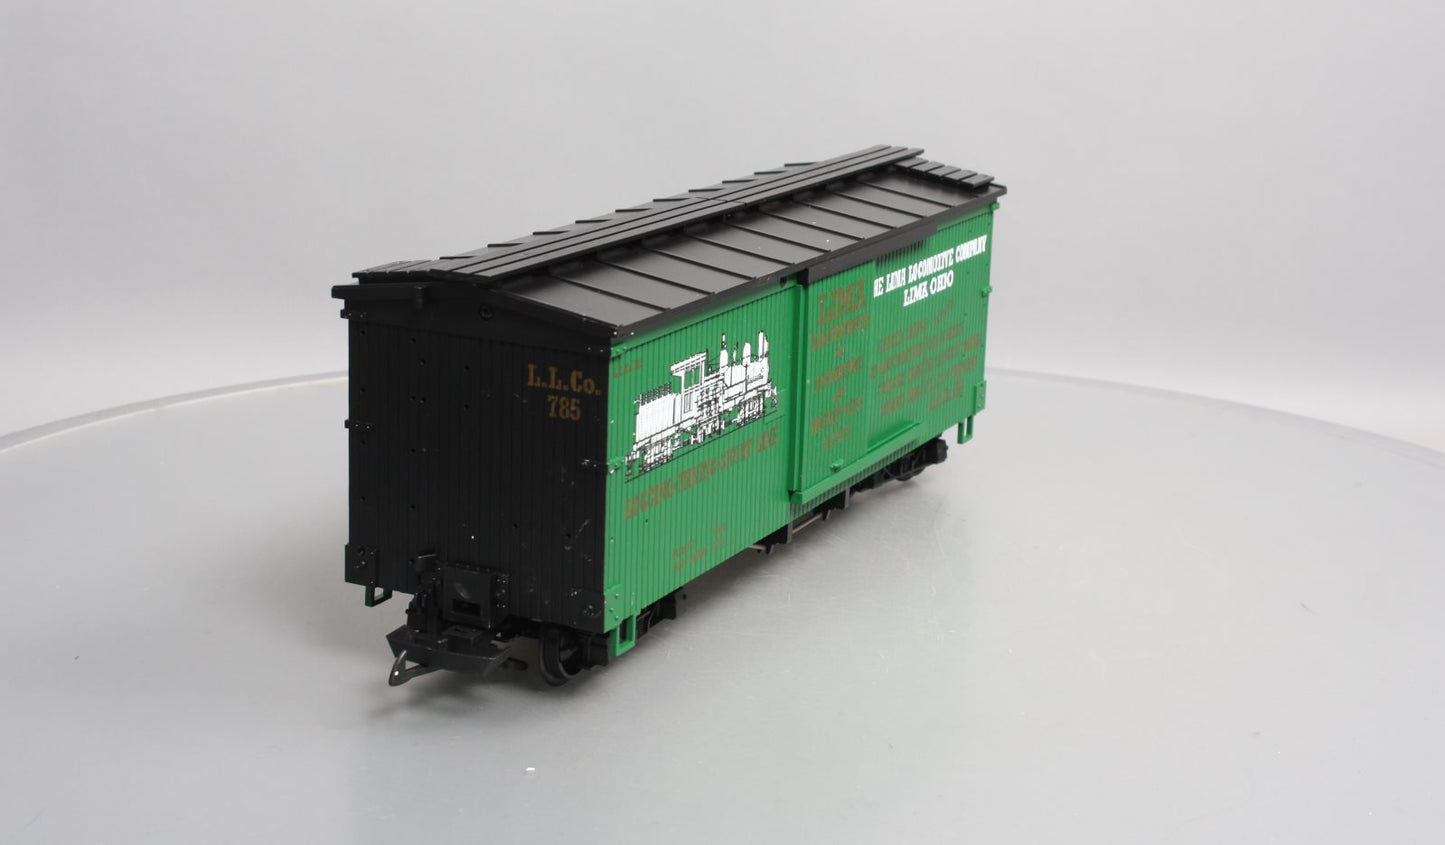 USA Trains R19038 G Lima Locomotive Company Boxcar #785 LN/Box